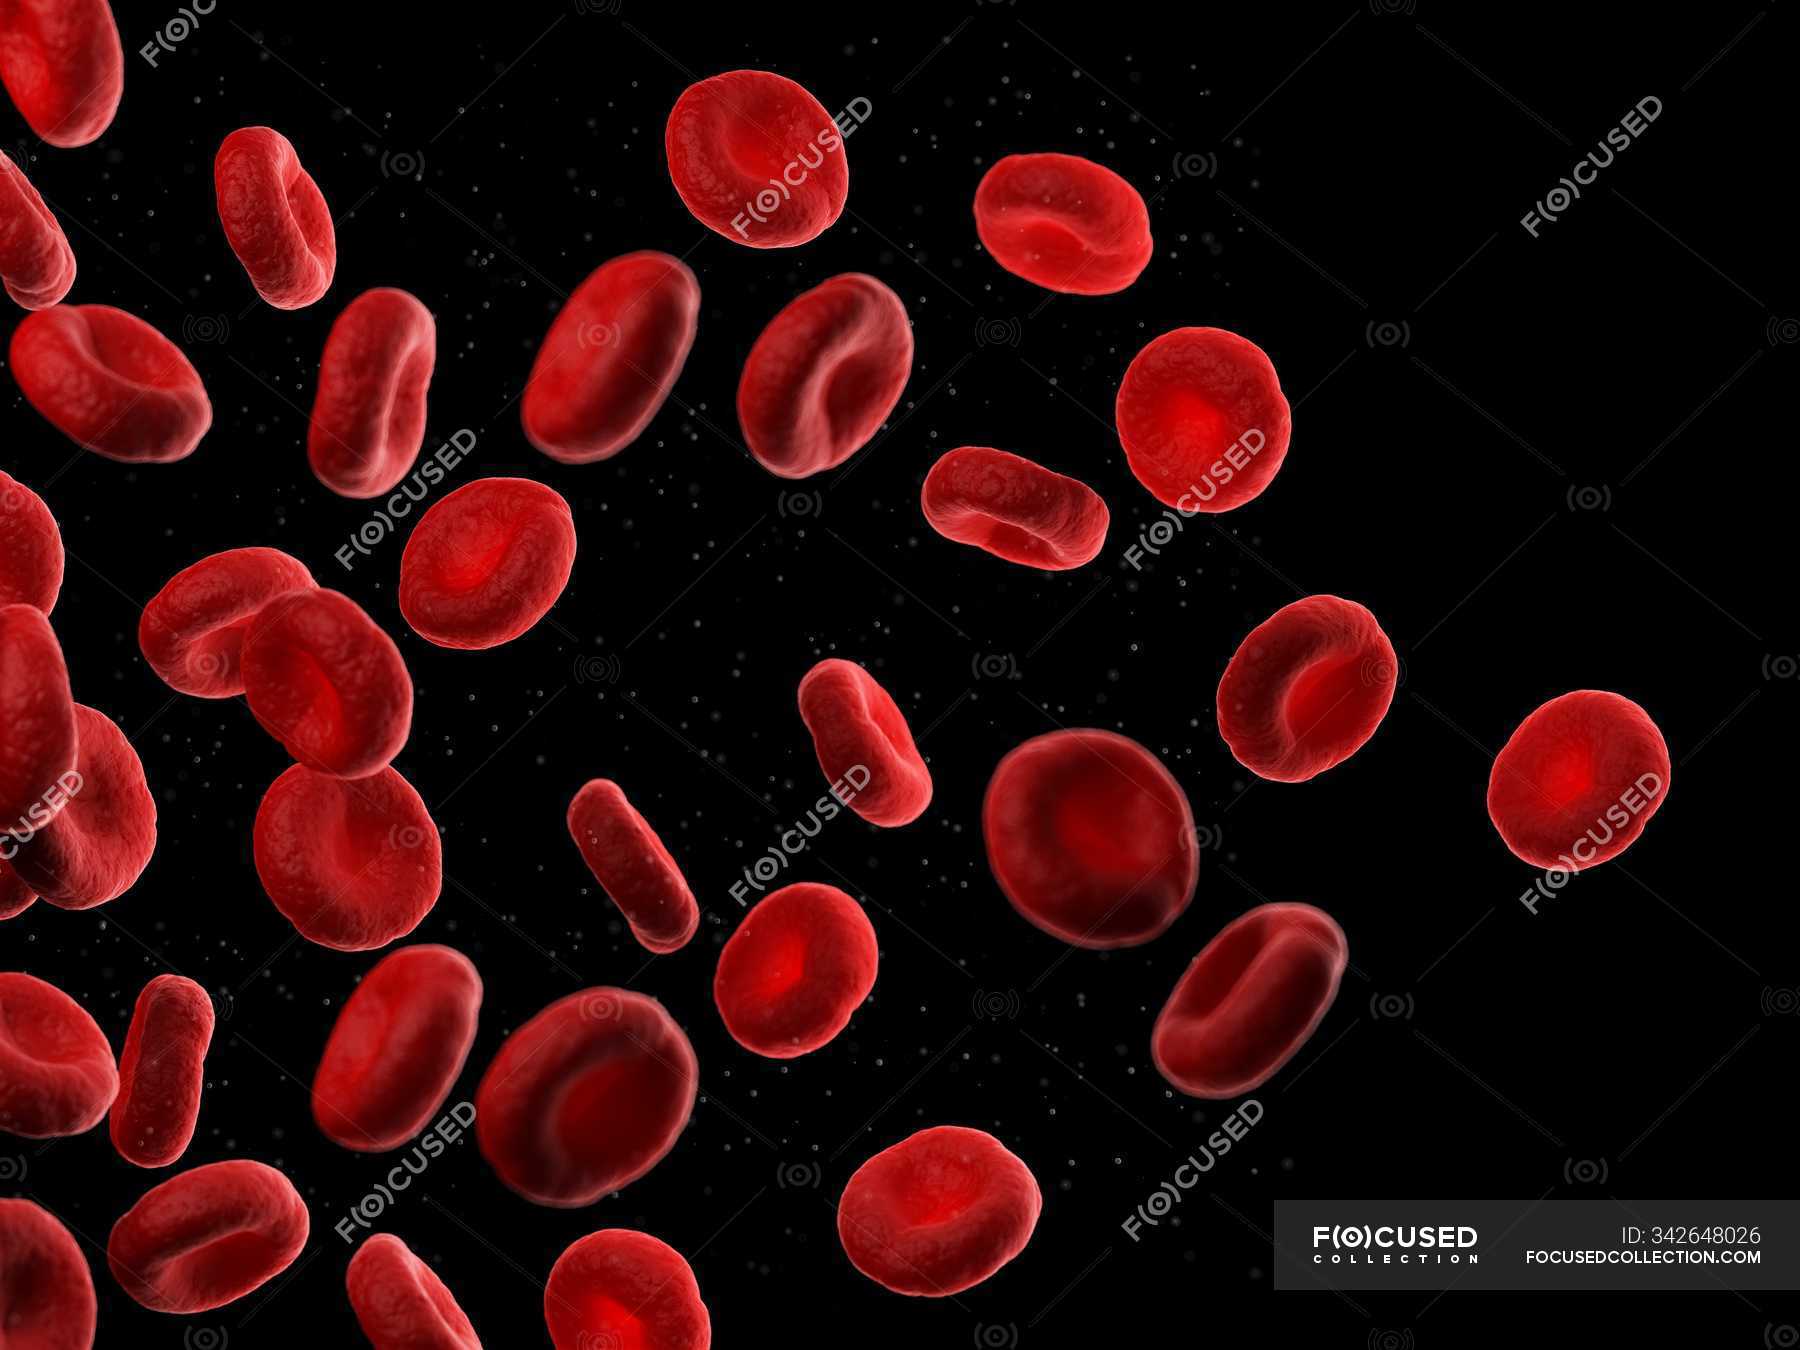 Red blood cells on black background, computer illustration. — erythrocytes,  human blood - Stock Photo | #342648026